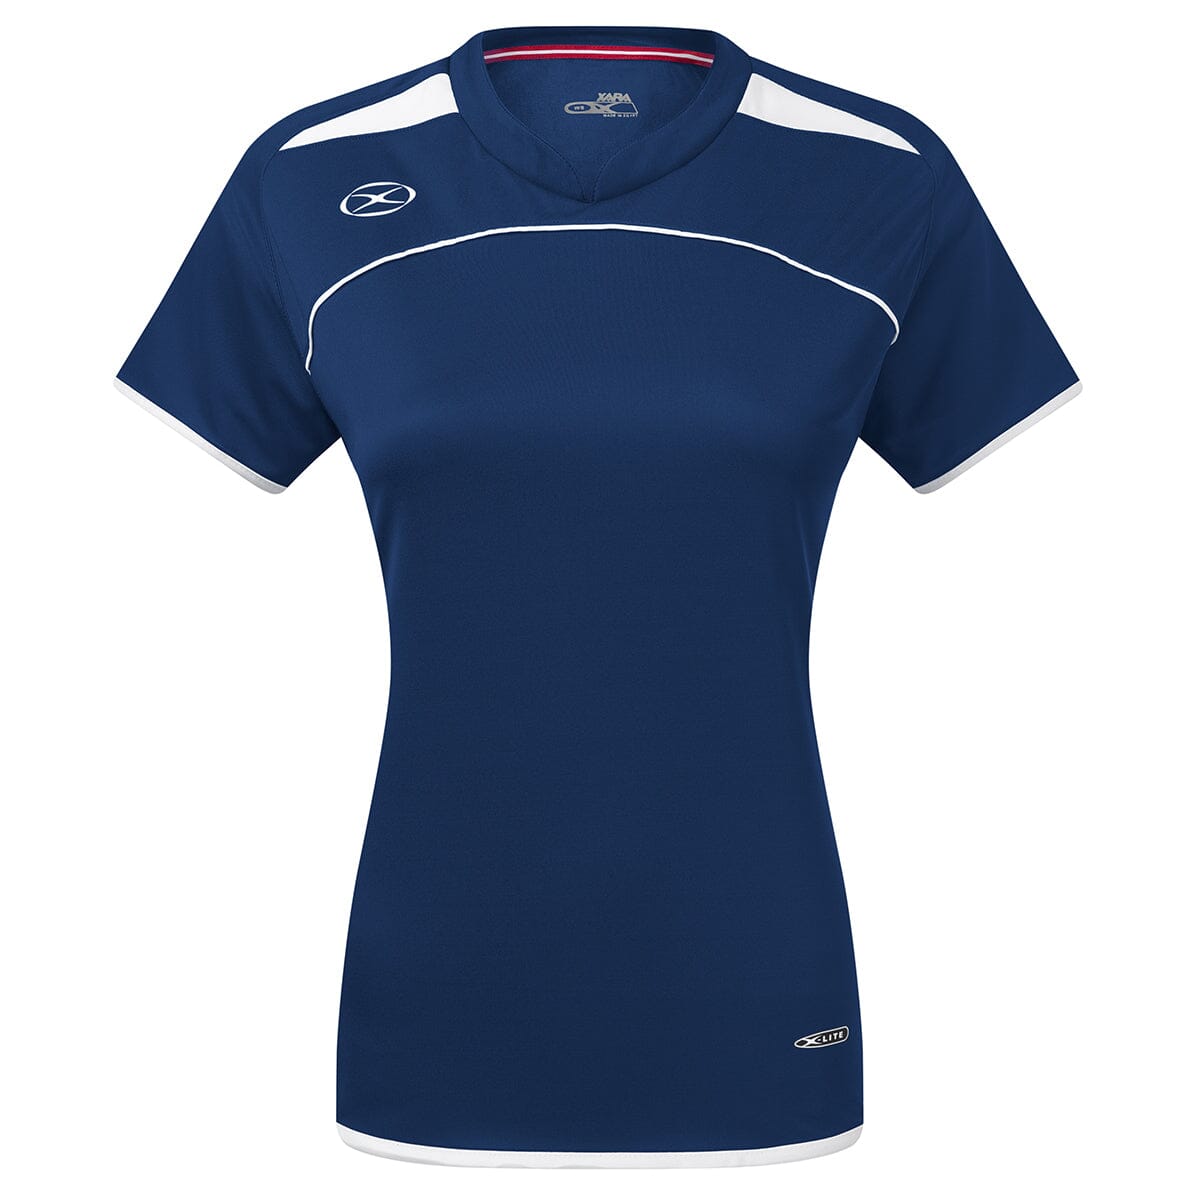 Cardiff Jersey - Female Shirt Xara Soccer Navy/White Womens Small 